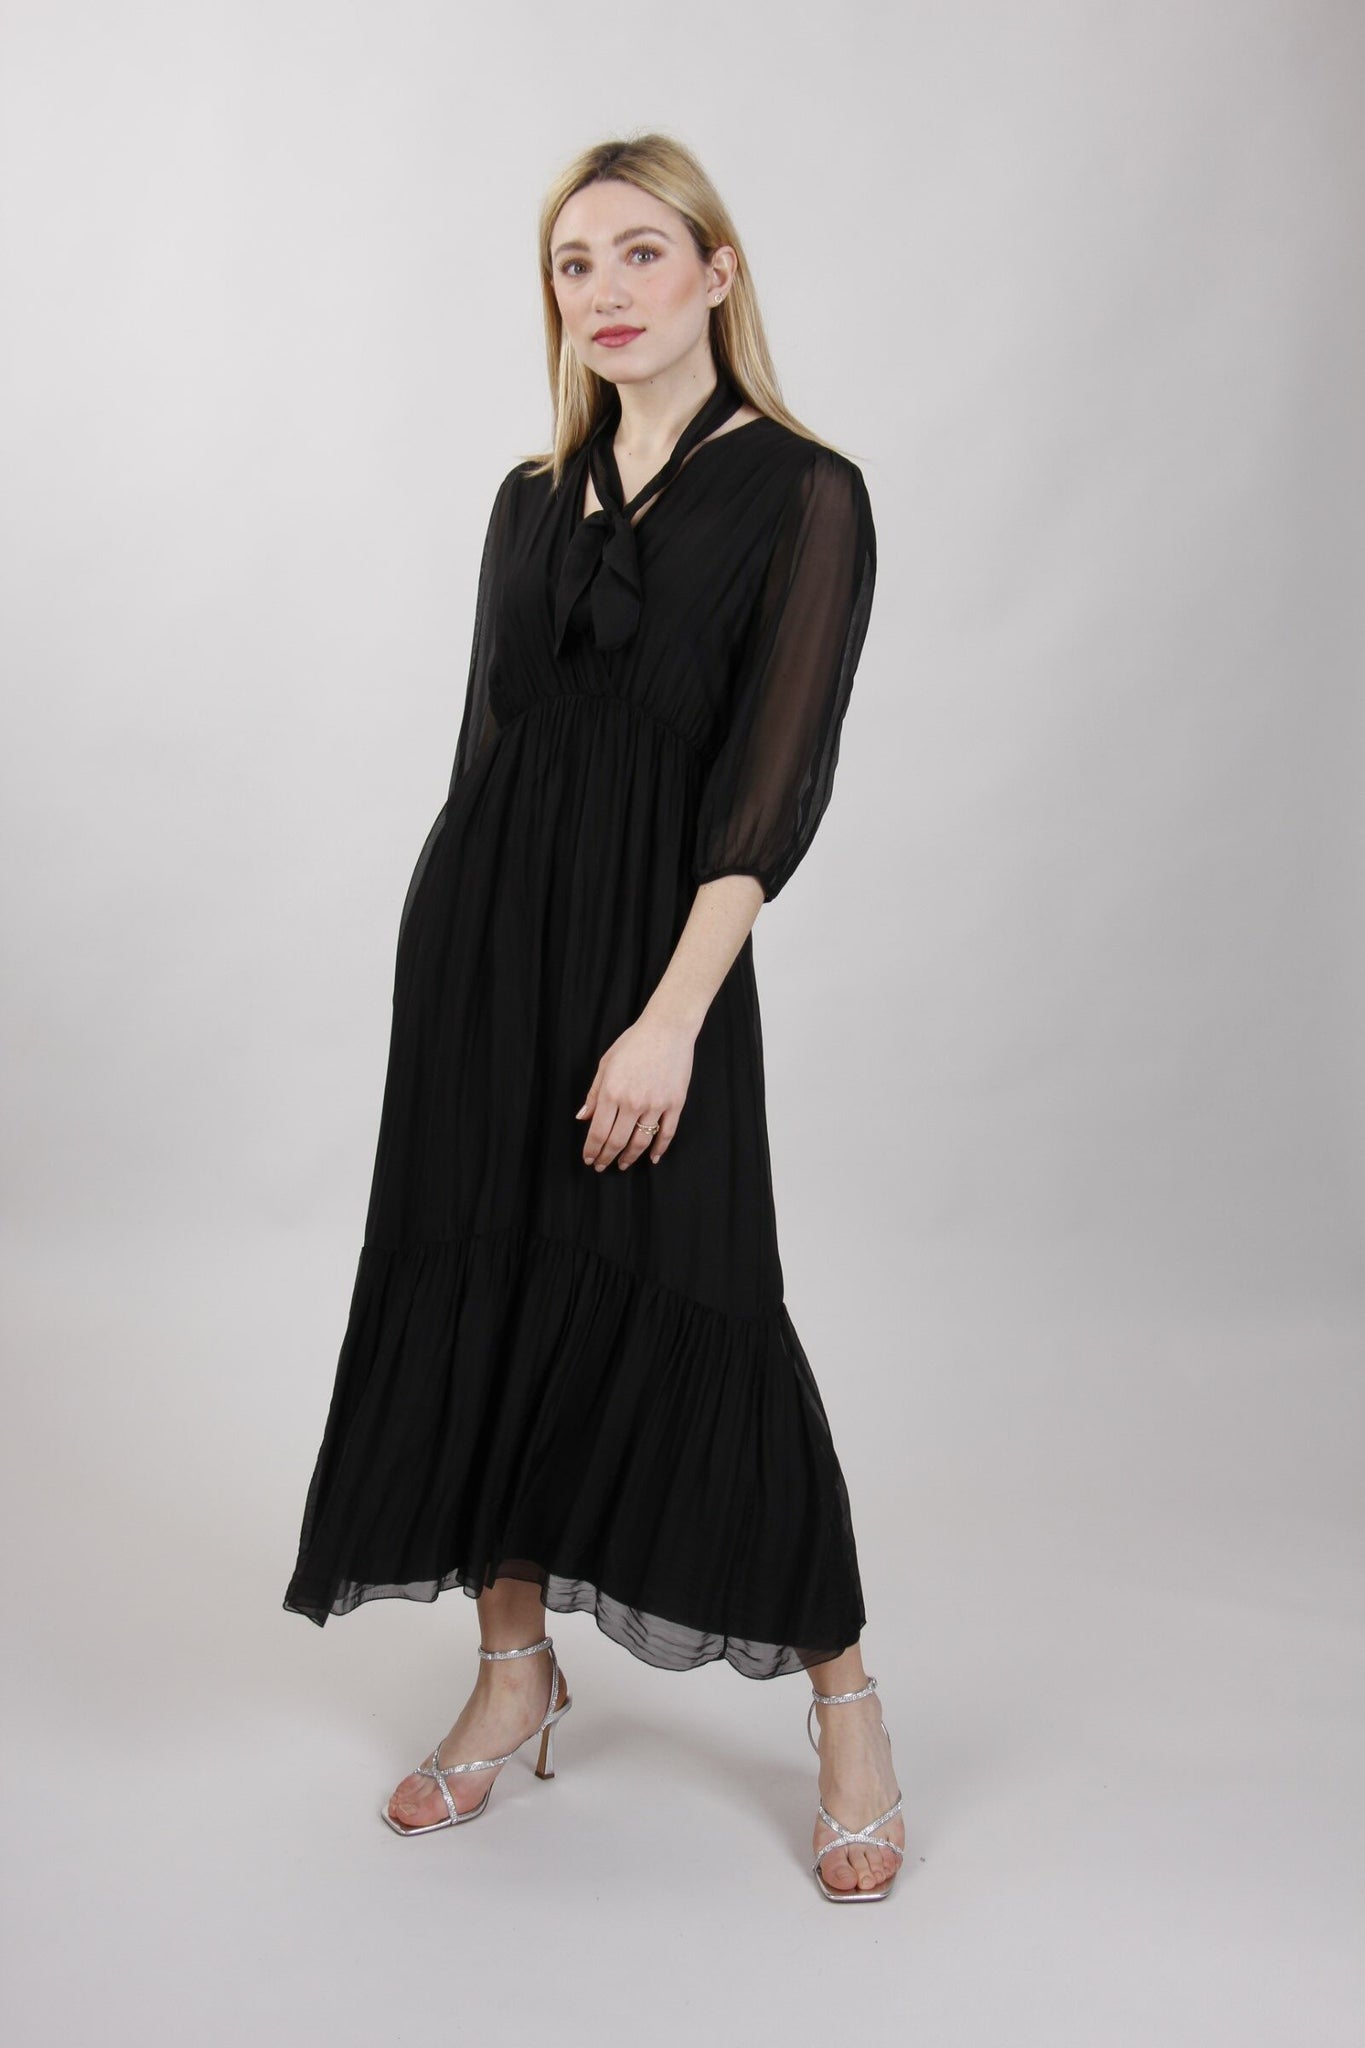 Black chic dress with silk